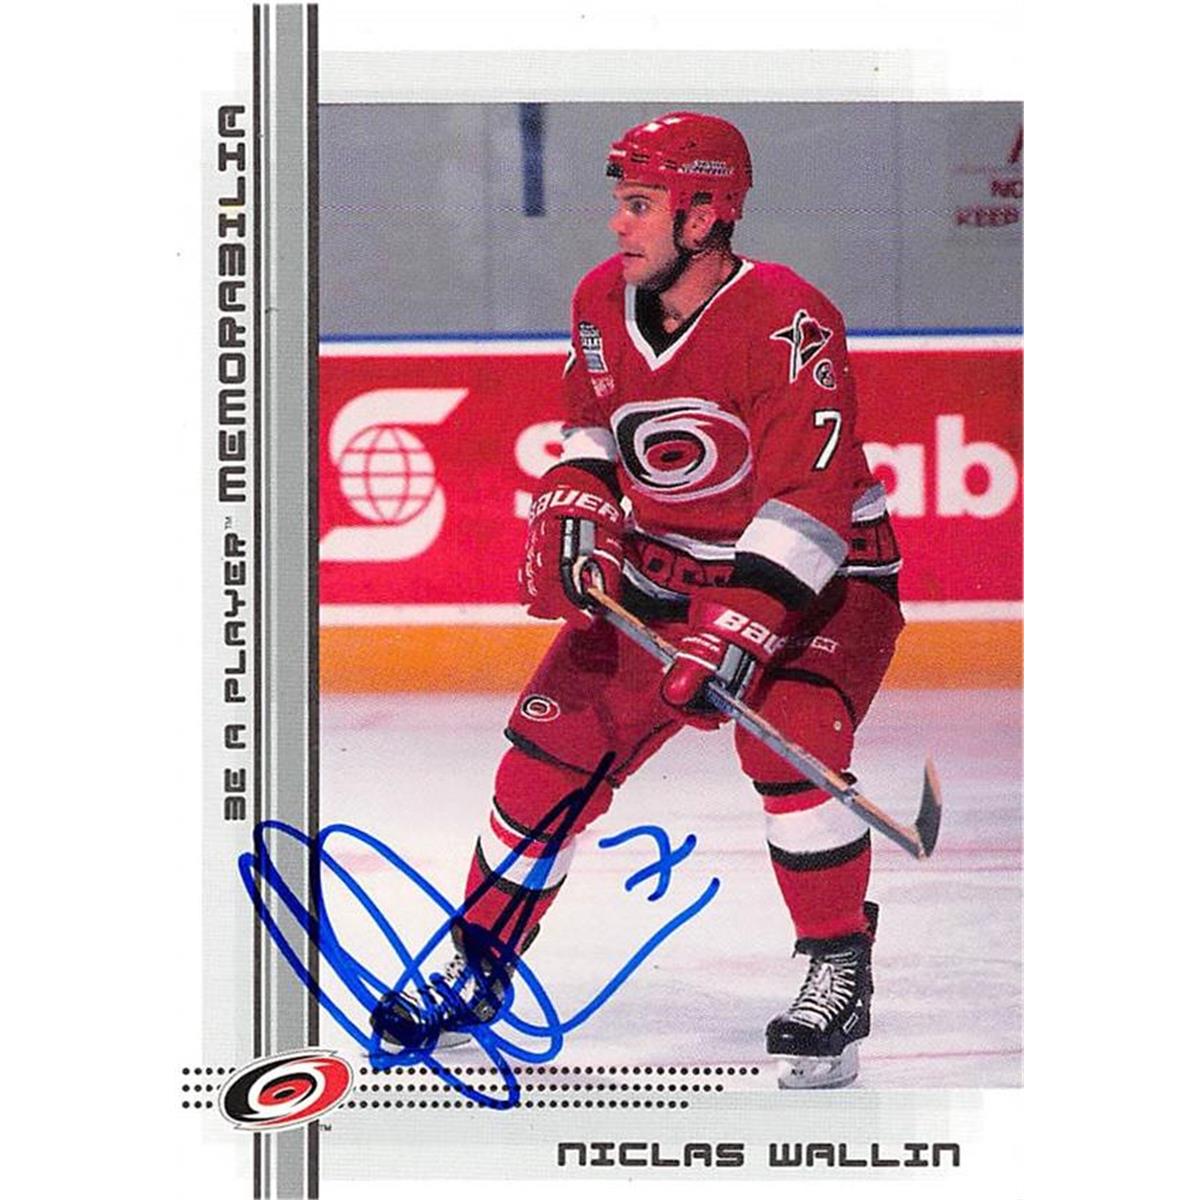 Picture of Autograph Warehouse 466097 Niclas Wallin Autographed Carolina Hurricanes Hockey Card 2000 BAP No. 419